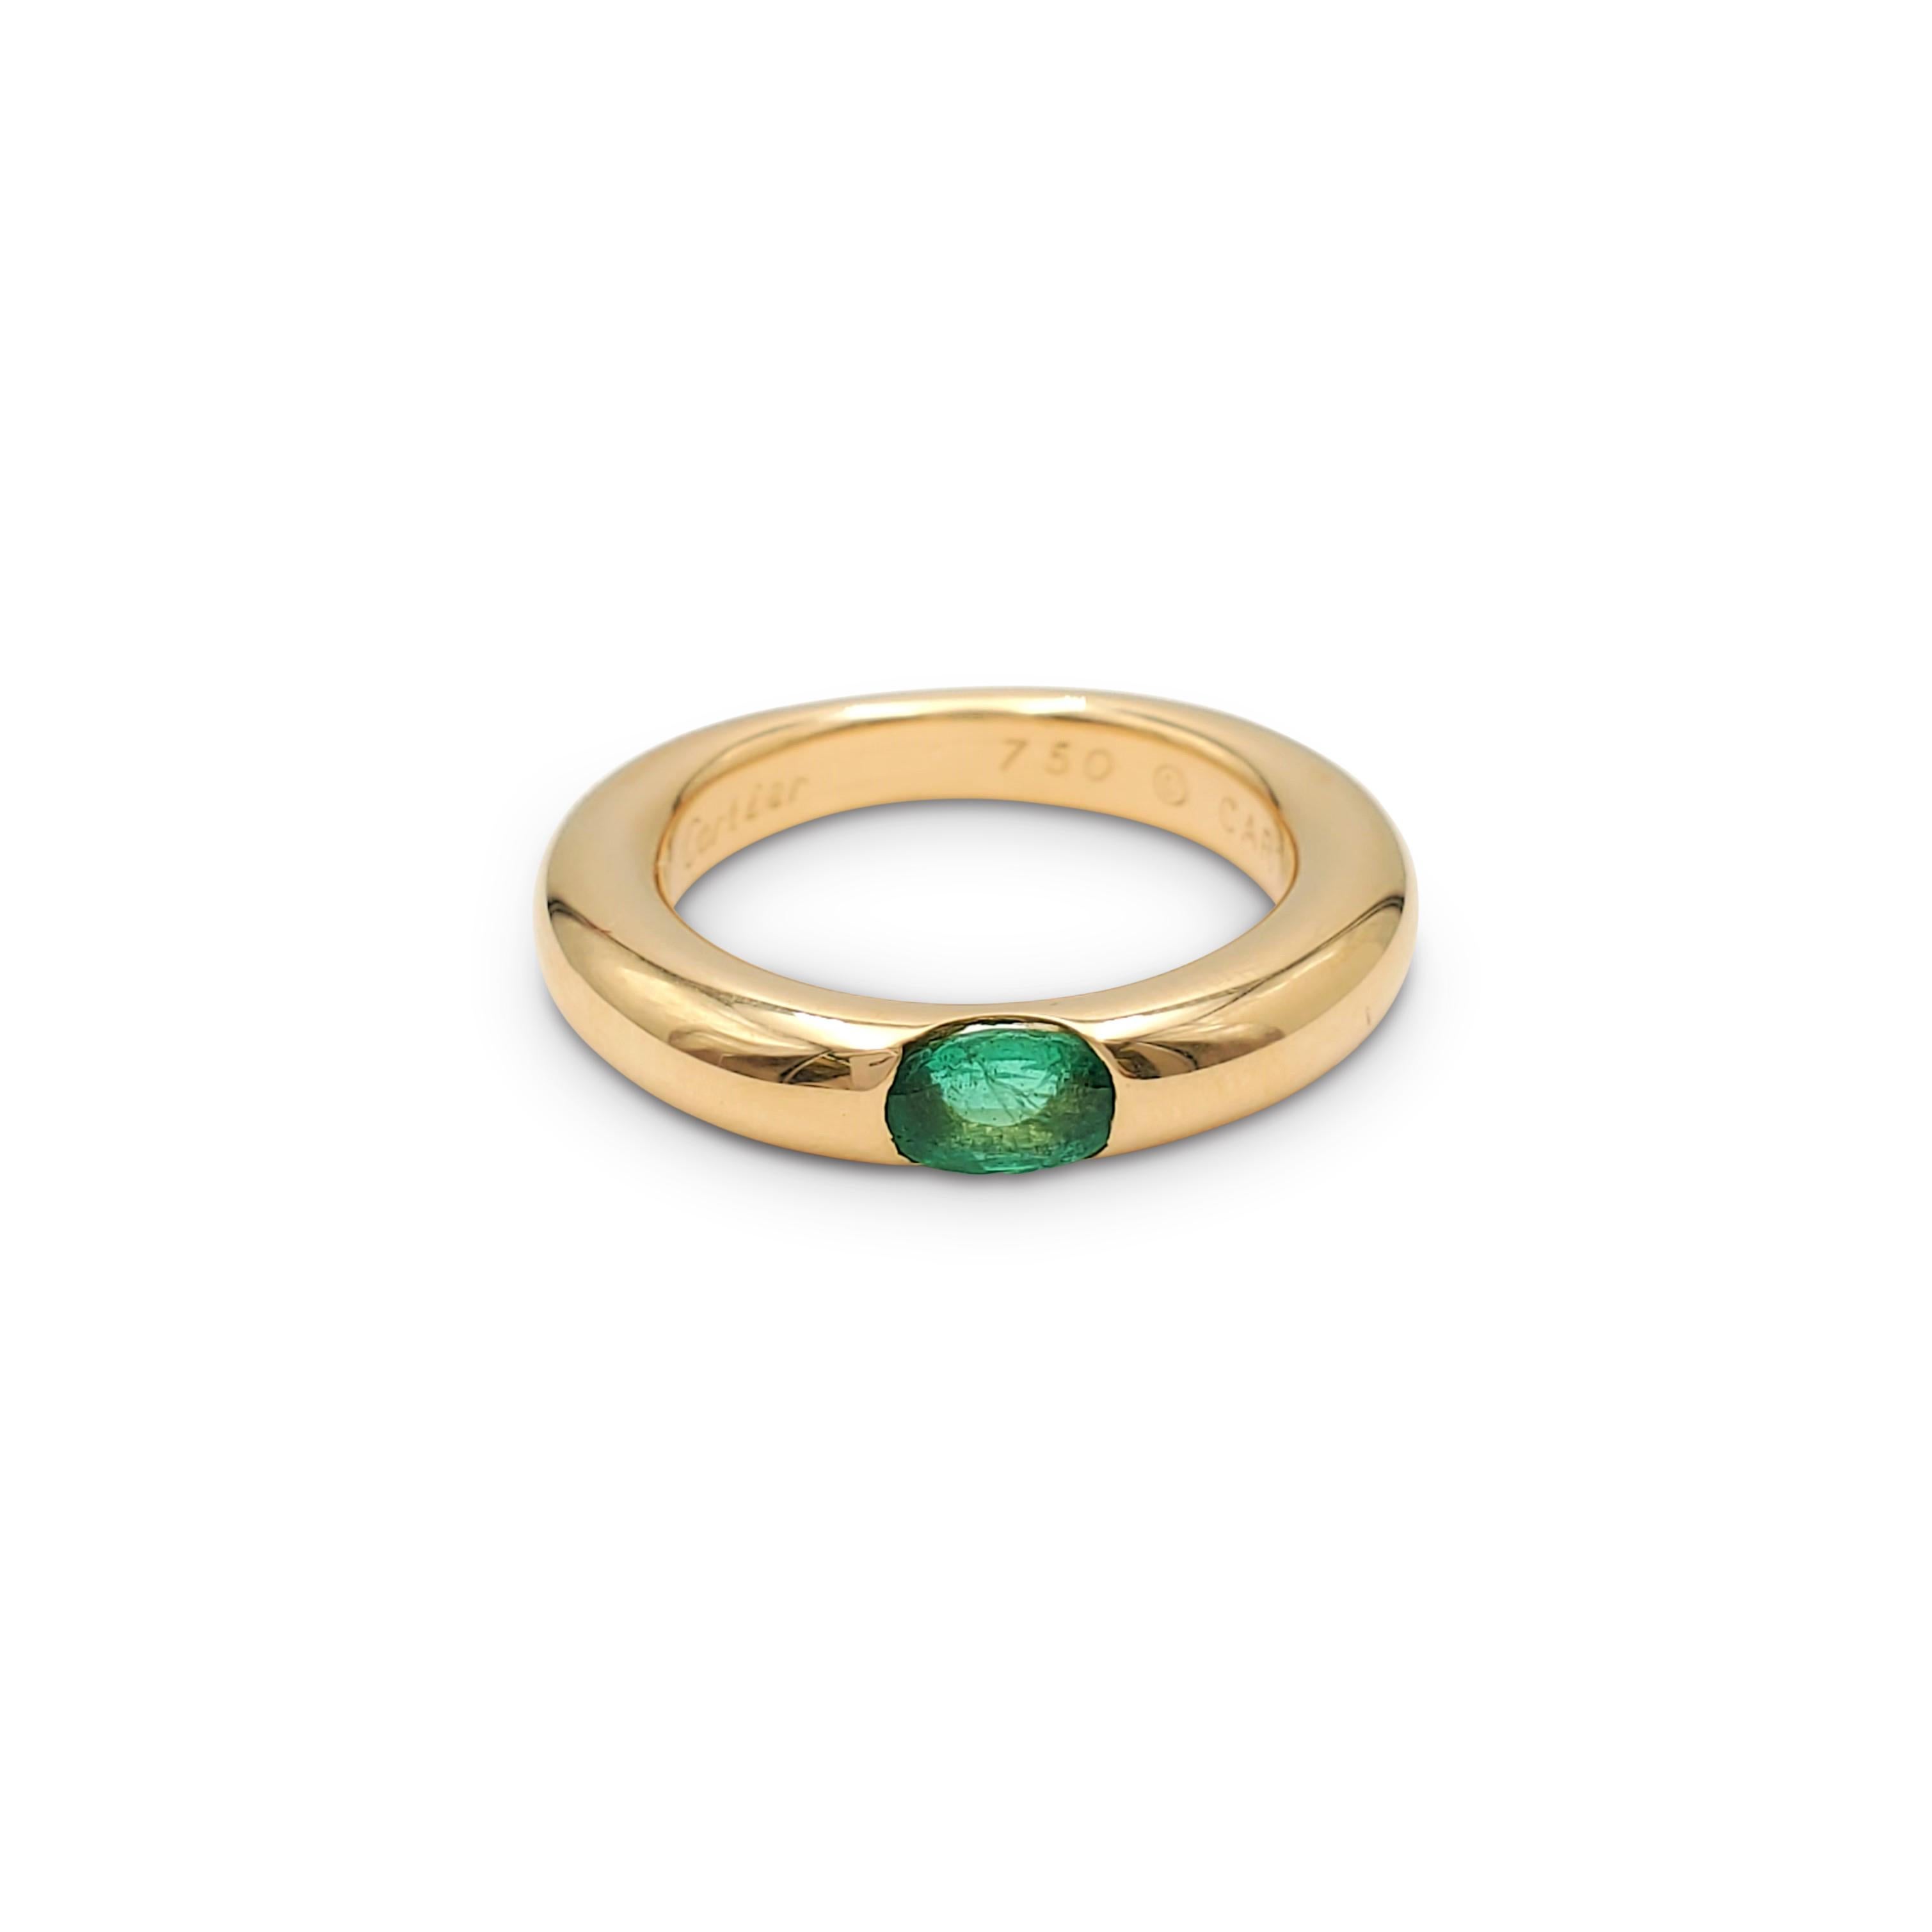 cartier ellipse emerald ring